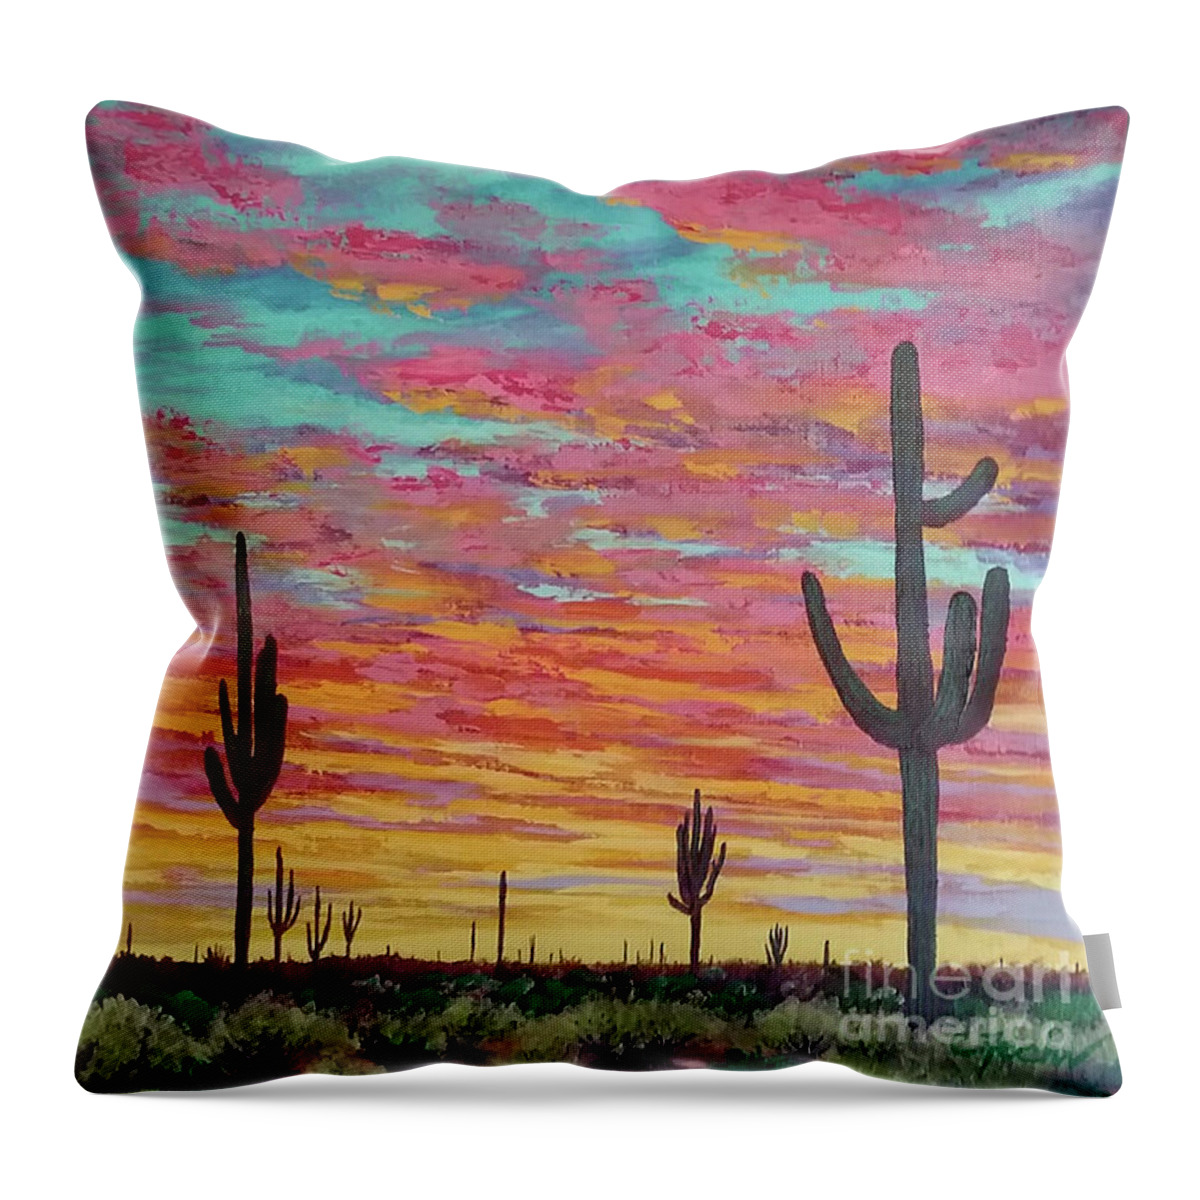 Sunset Throw Pillow featuring the painting An Arizona Sunset by Cheryl Fecht